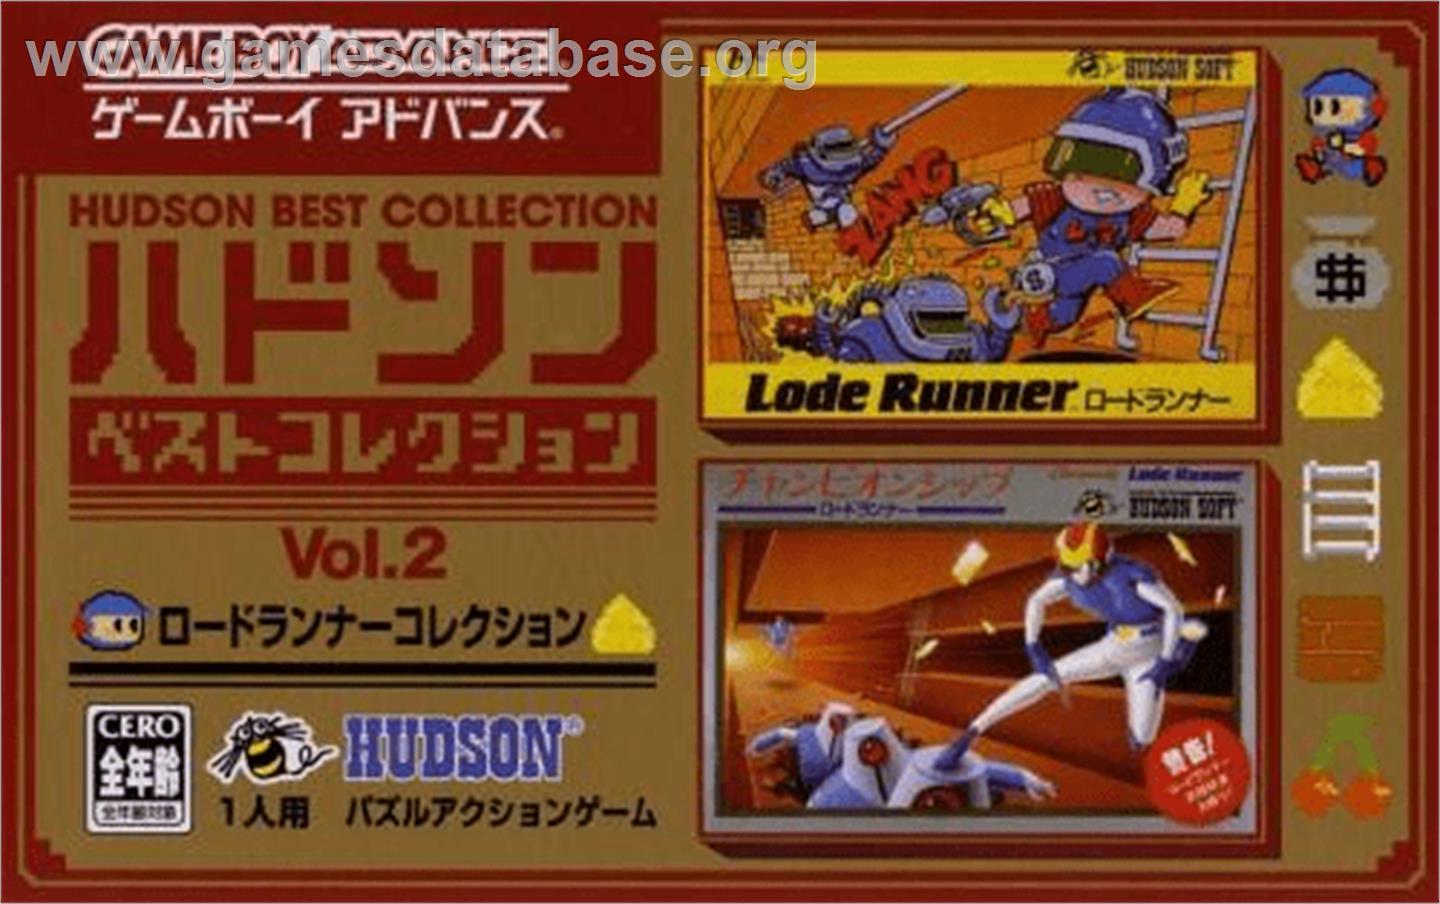 Hudson Best Collection Vol. 2: Lode Runner Collection - Nintendo Game Boy Advance - Artwork - Box